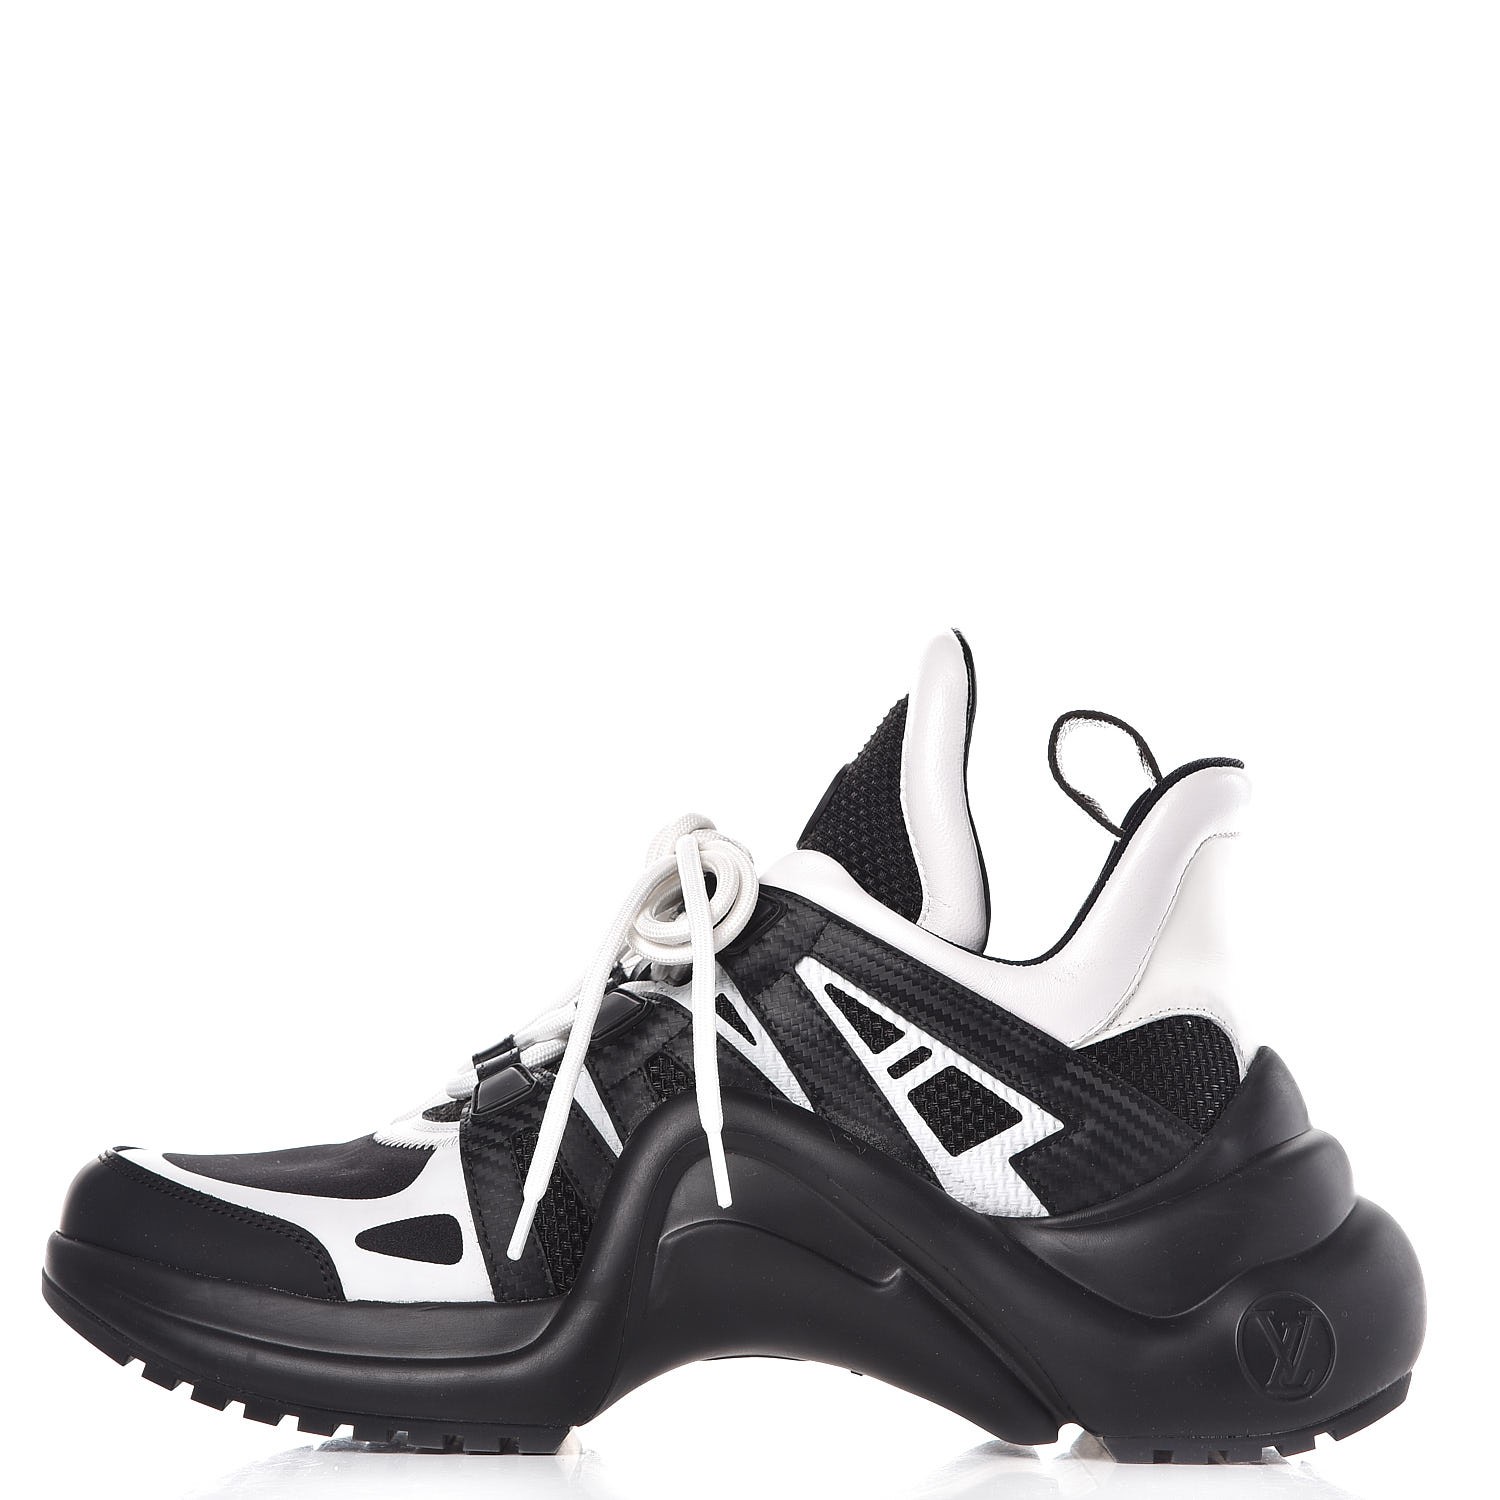 LOUIS VUITTON Calfskin Technical Nylon LV Archlight Sneakers 38.5 Black White 287778